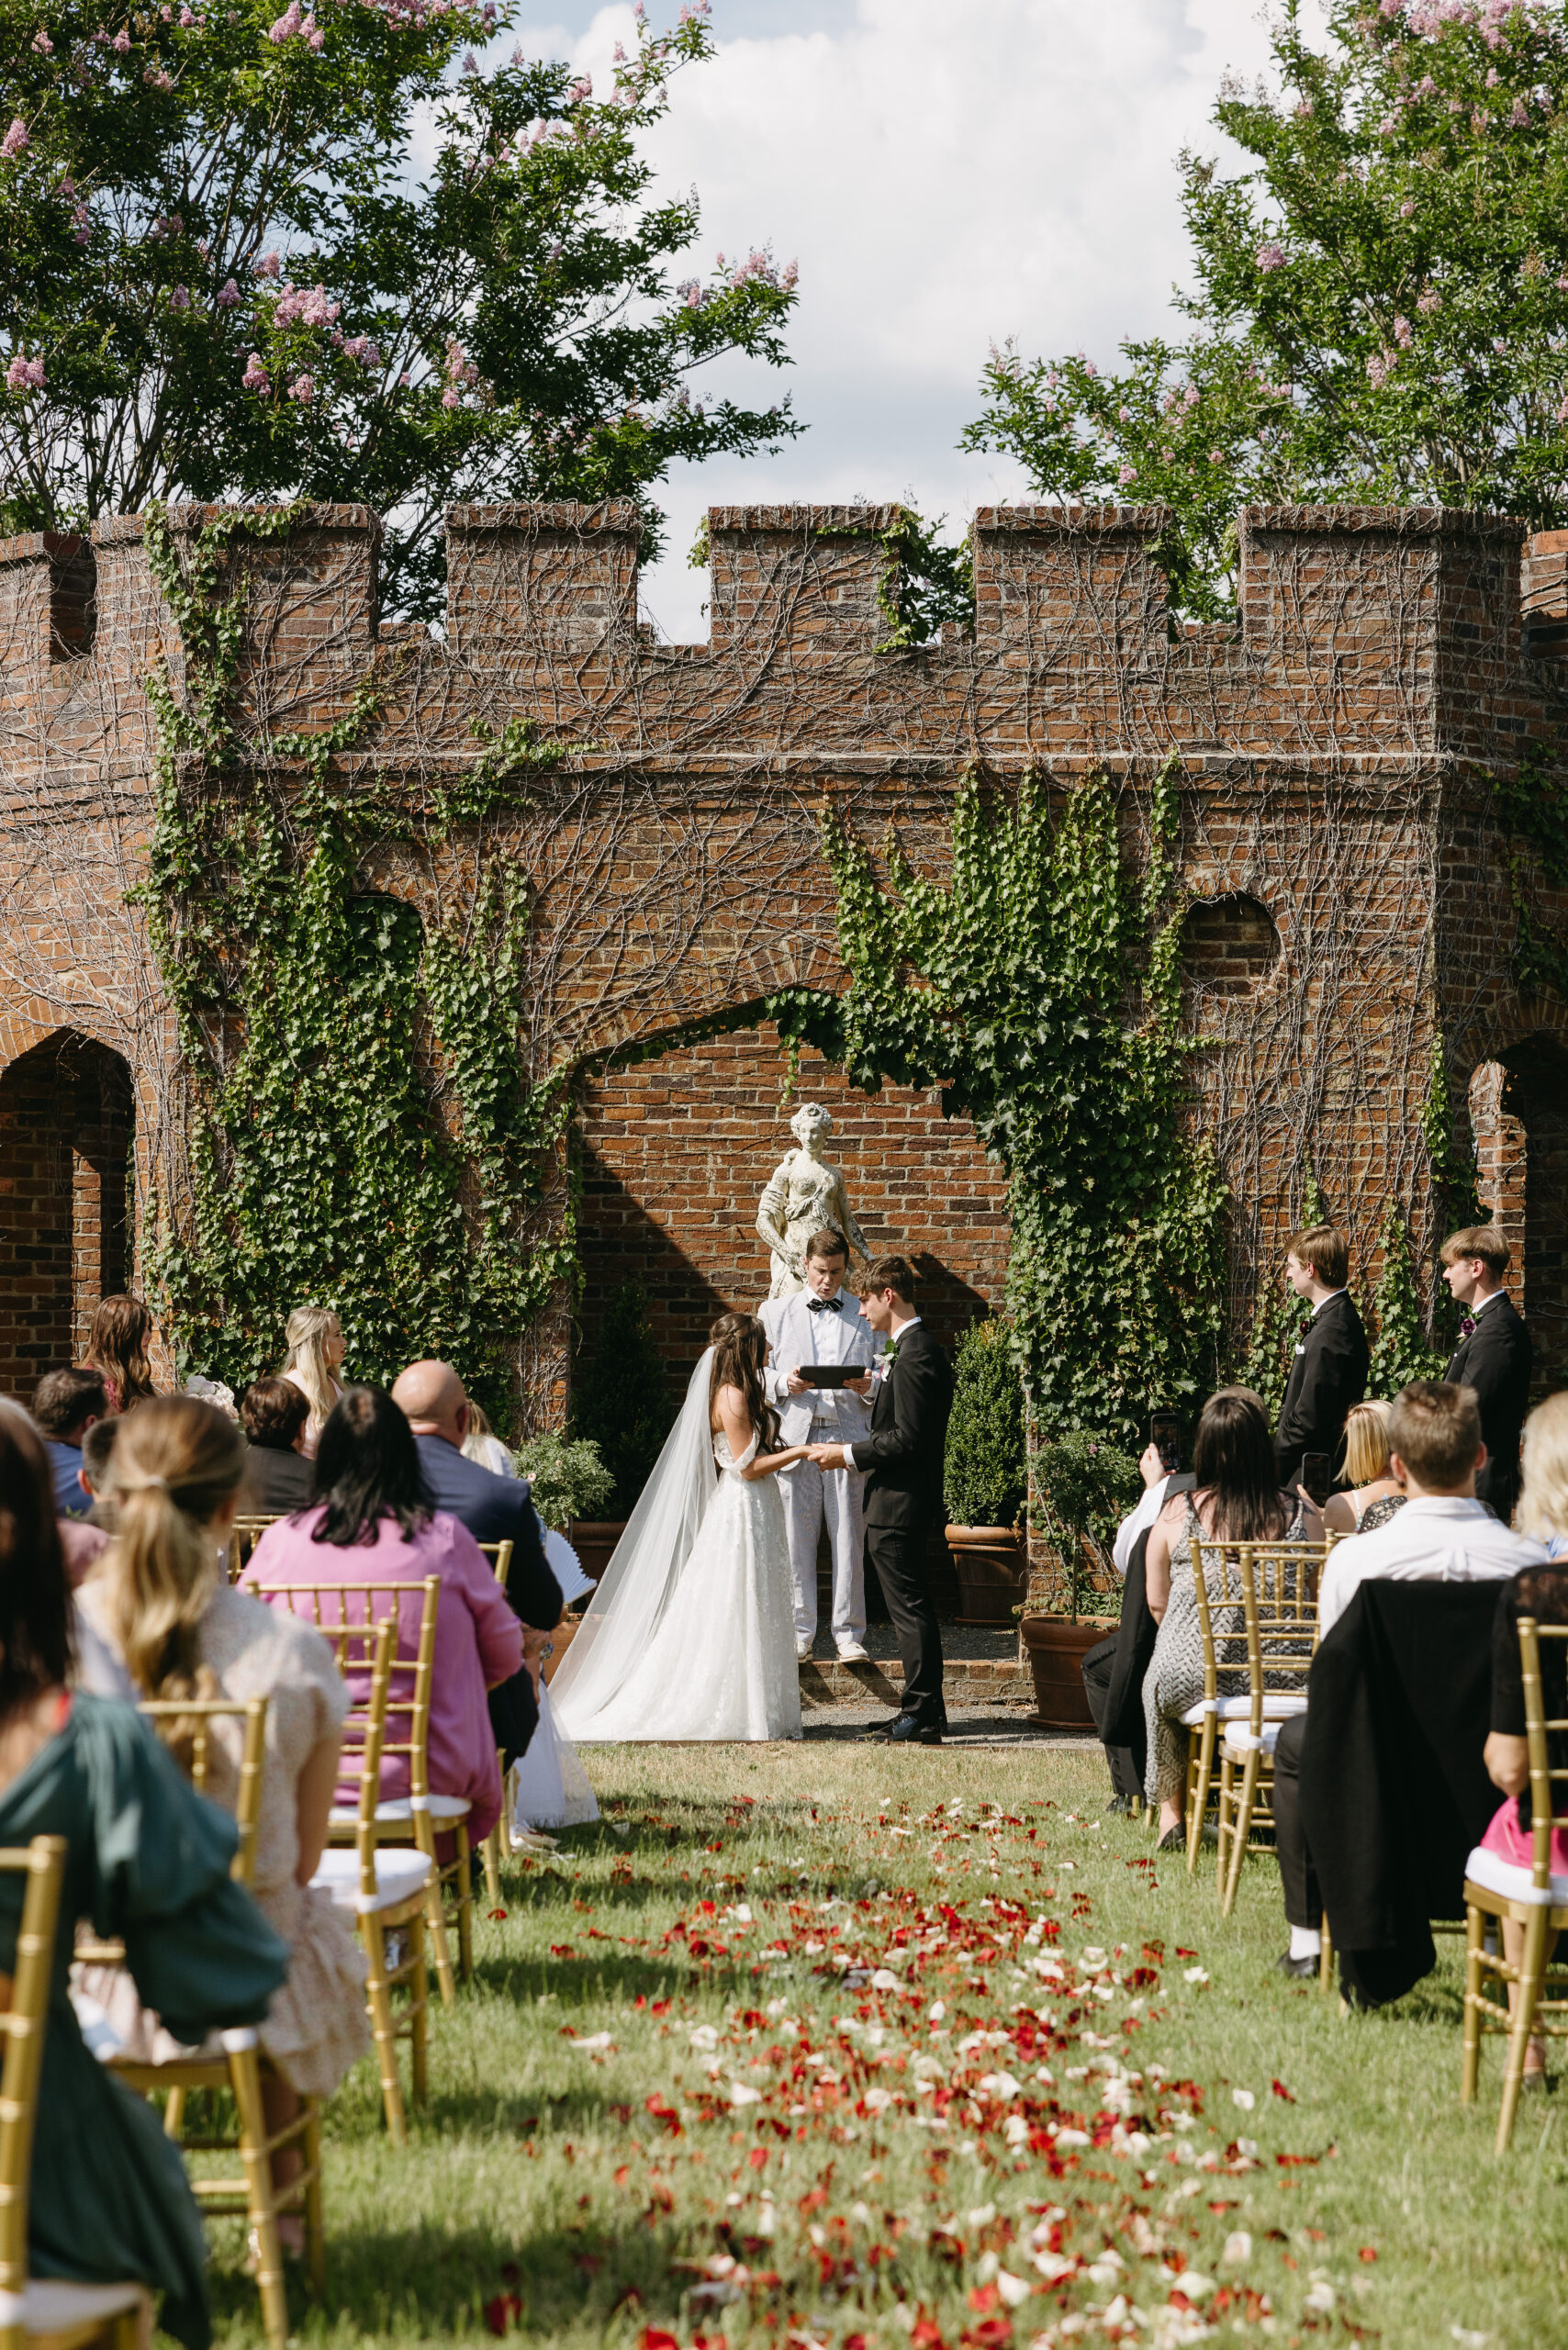 Enchanting Grace in Bloom: A Sophisticated Garden Fairytale Wedding